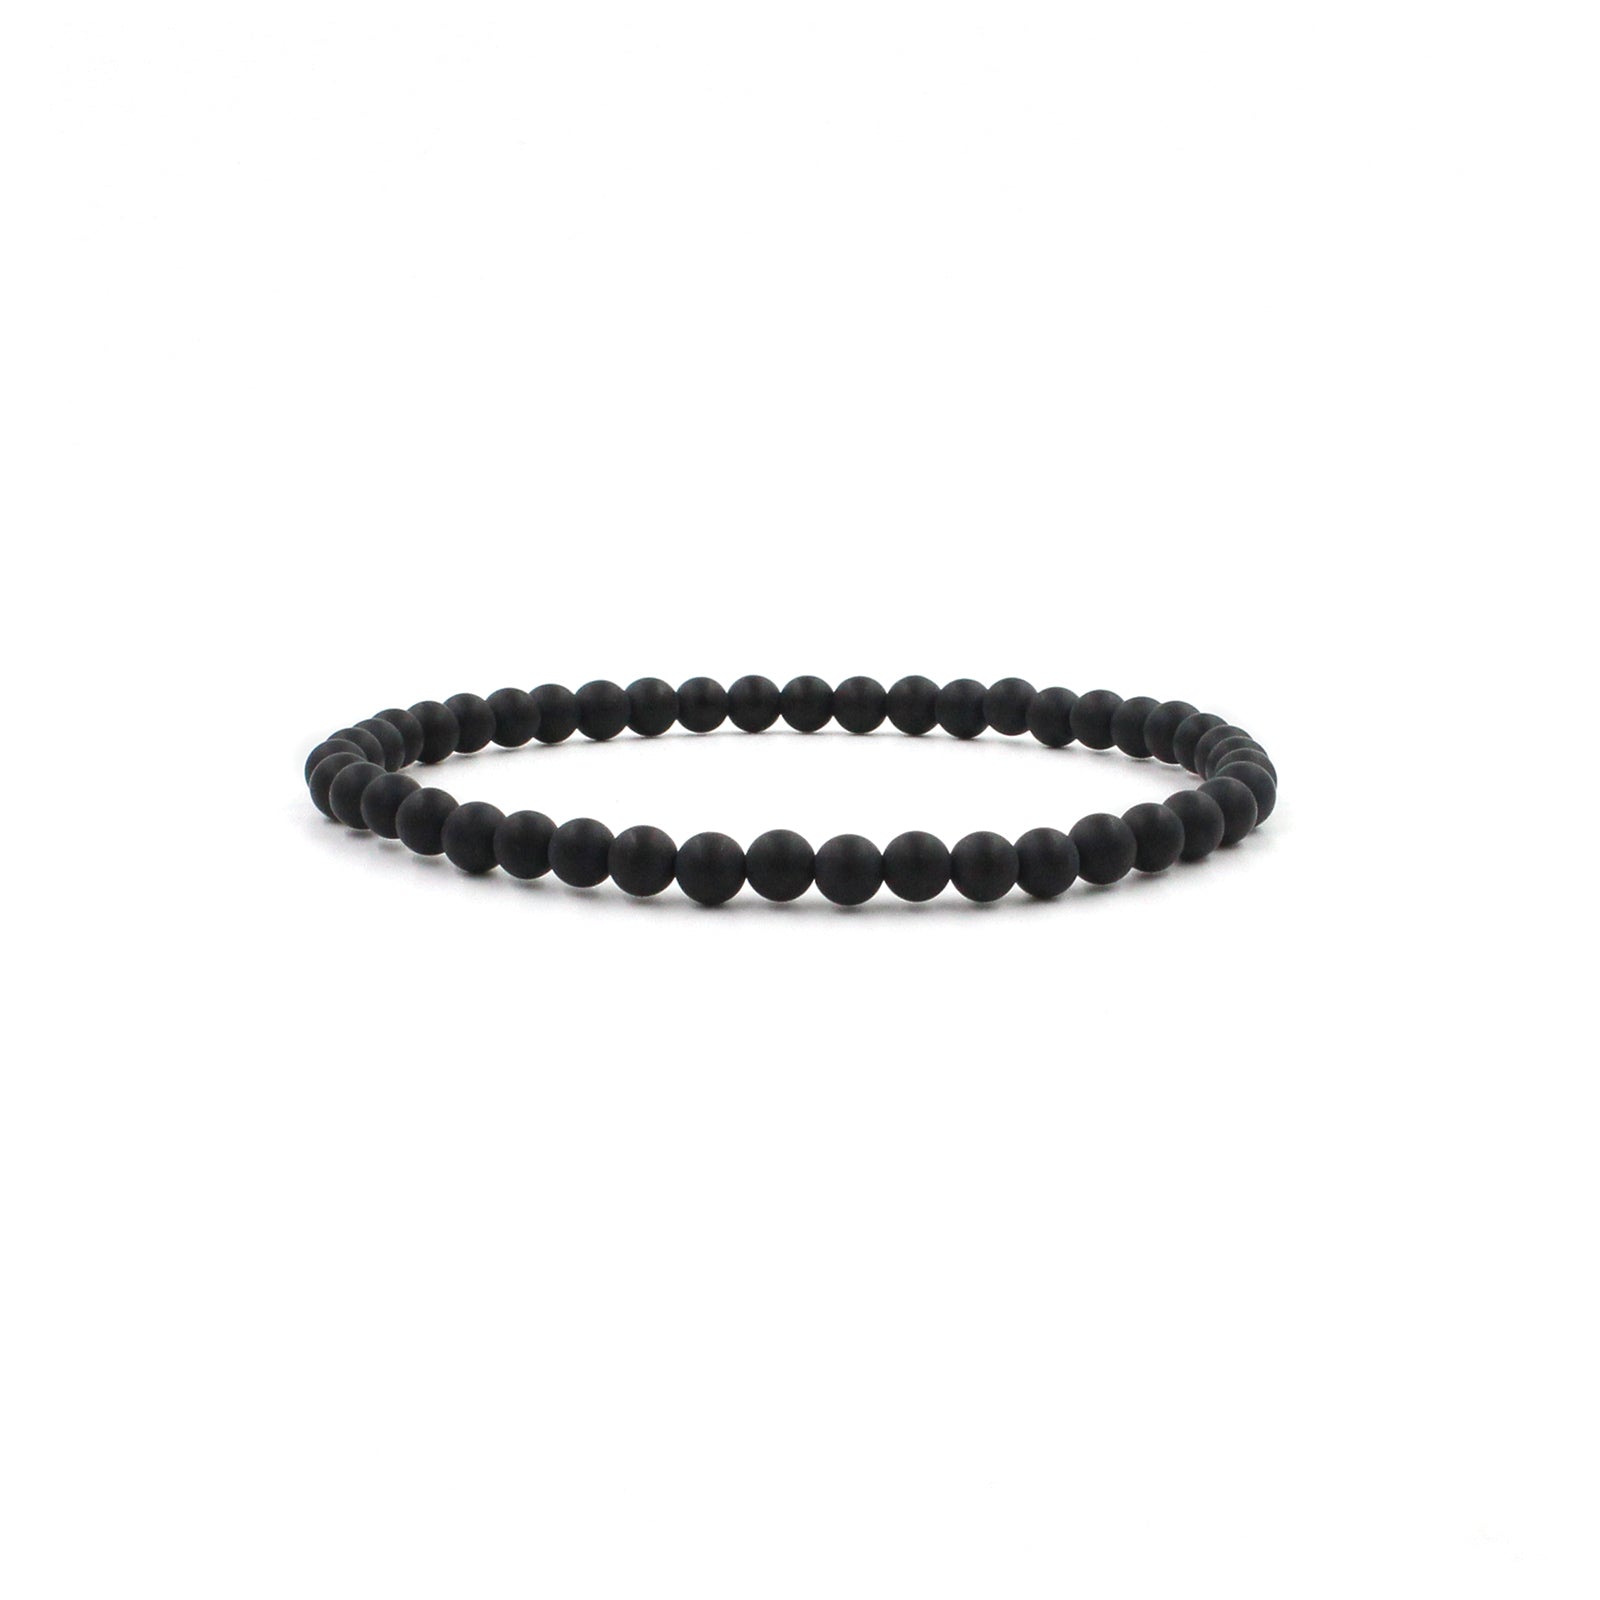 Buy Agate DZI Money Hook Bracelet Black Onyx Beads Bracelet Tibetan Amulet  for a Gift Online in India - Etsy